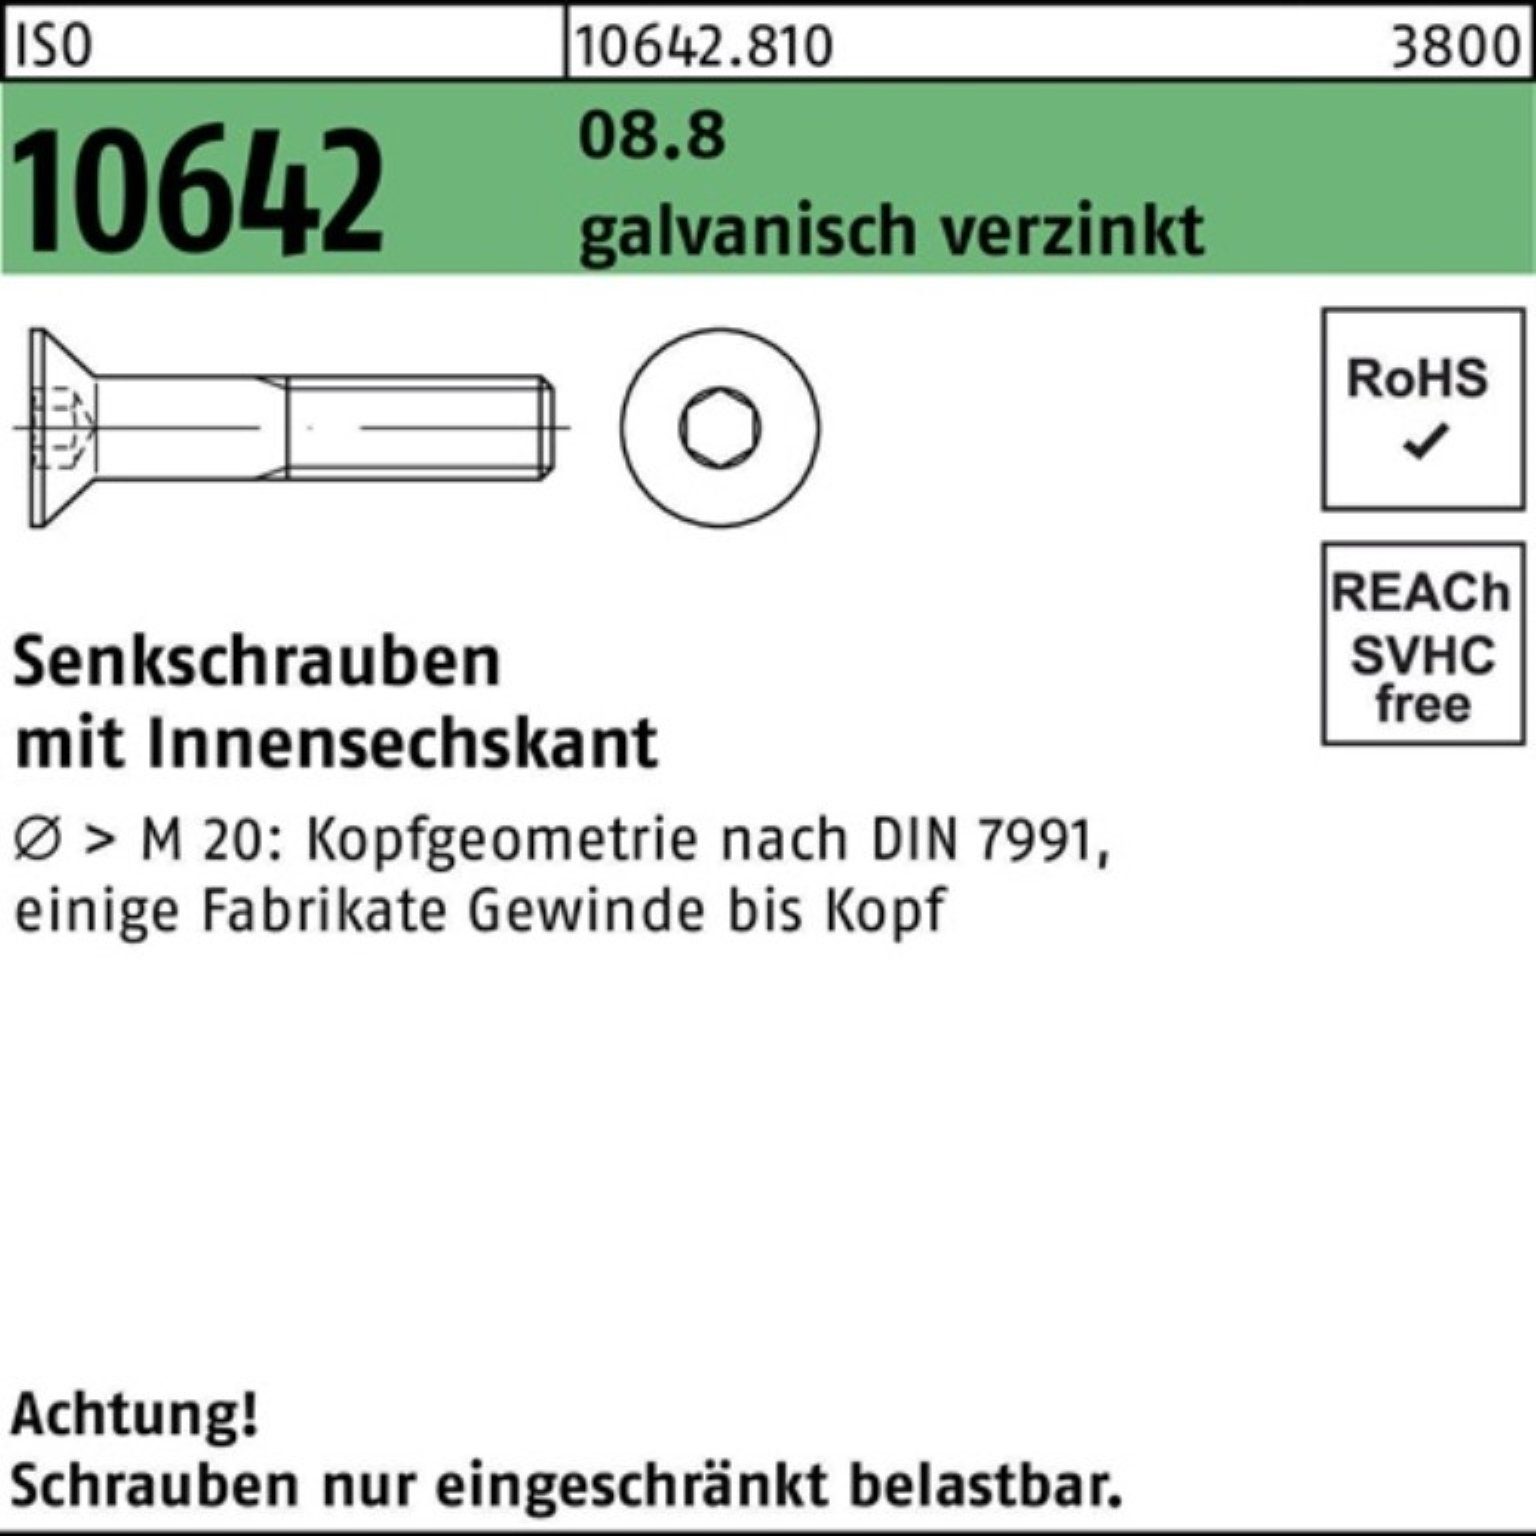 8 Pack galv.verz. S 100er Innen-6kt 8.8 Reyher Senkschraube 10642 ISO Senkschraube 100 M5x